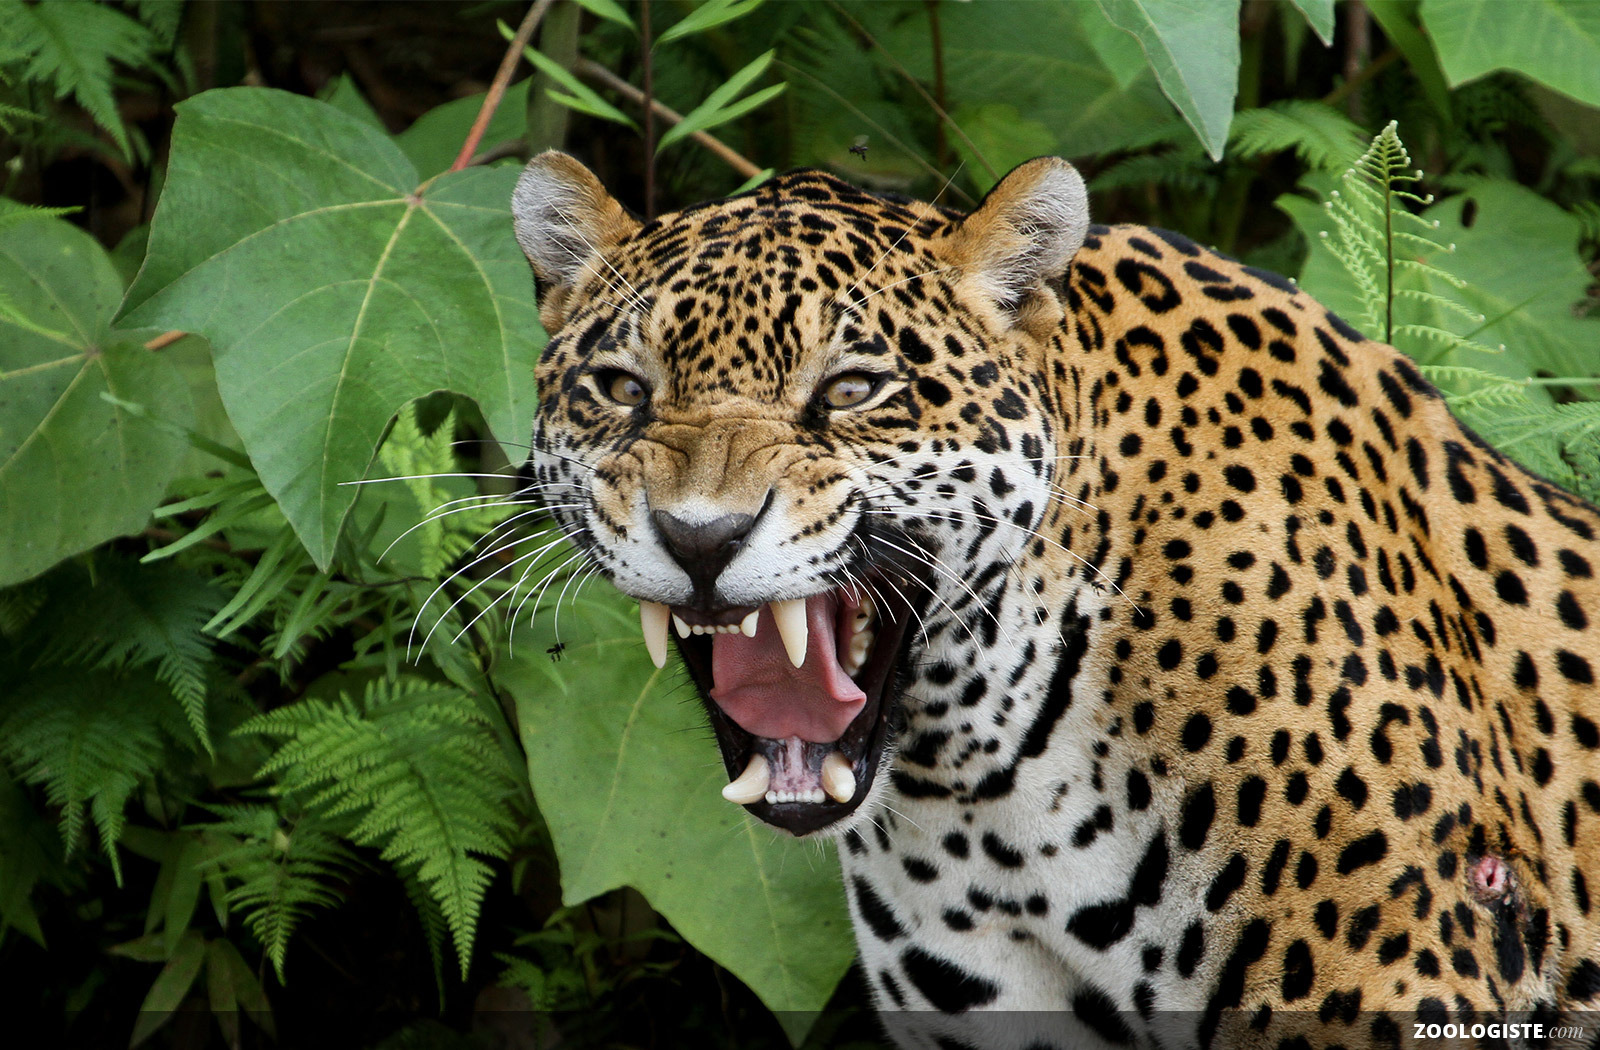  Jaguar  Zoologiste com